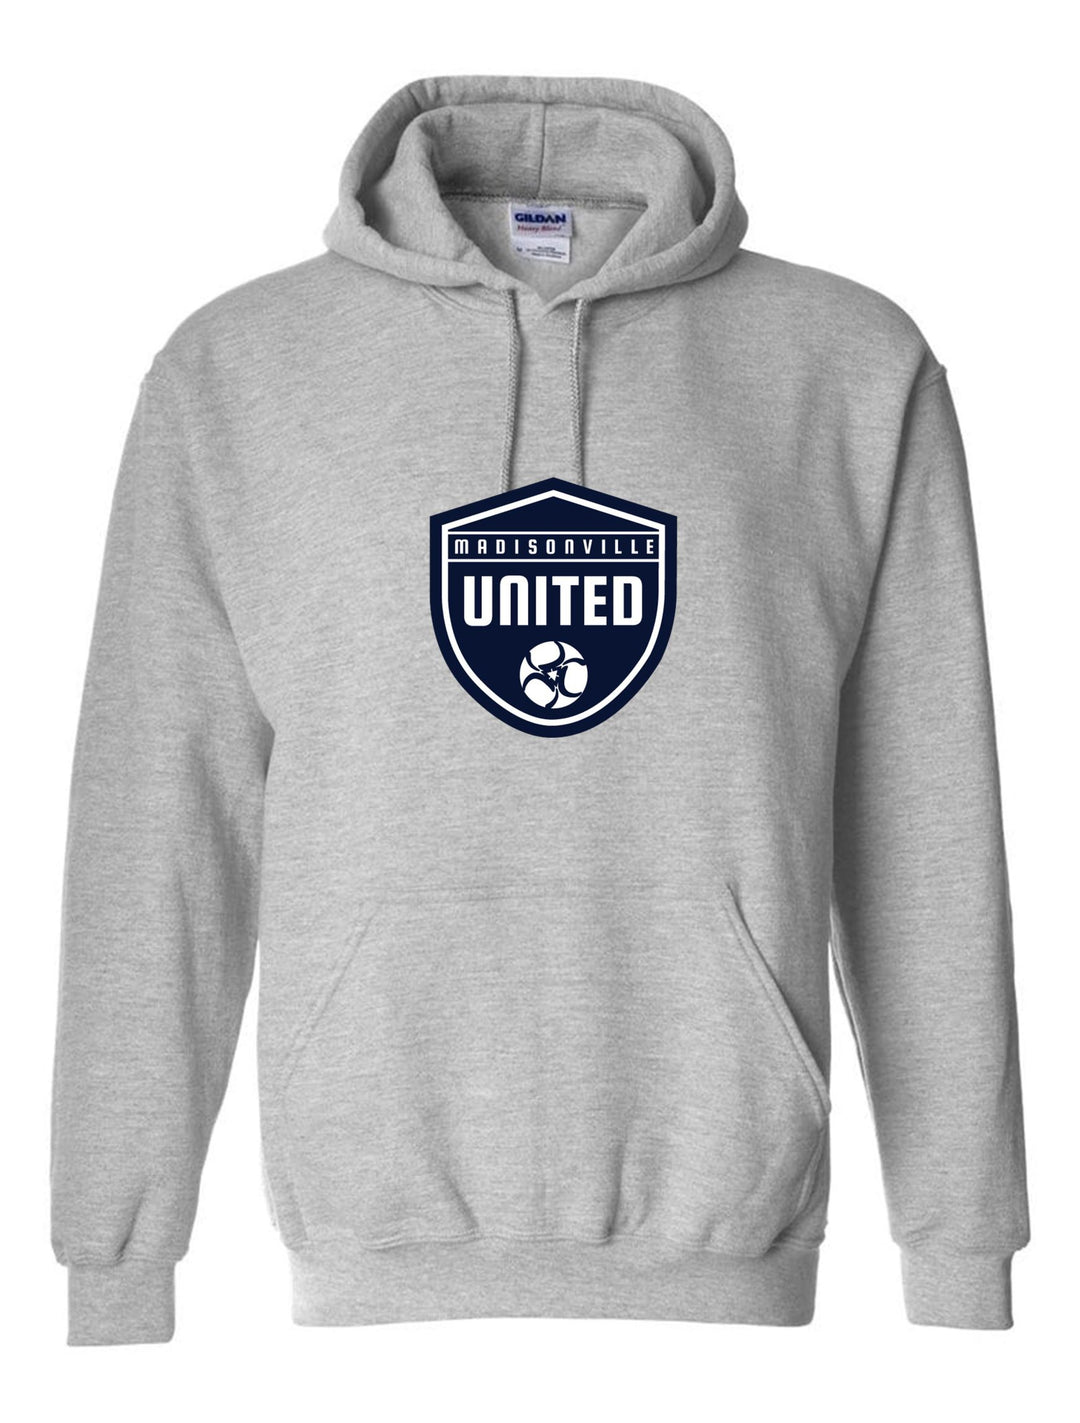 Madidsonville United Hoody - Black, Grey, Navy or White Madisonville United Spiritwear   - Third Coast Soccer